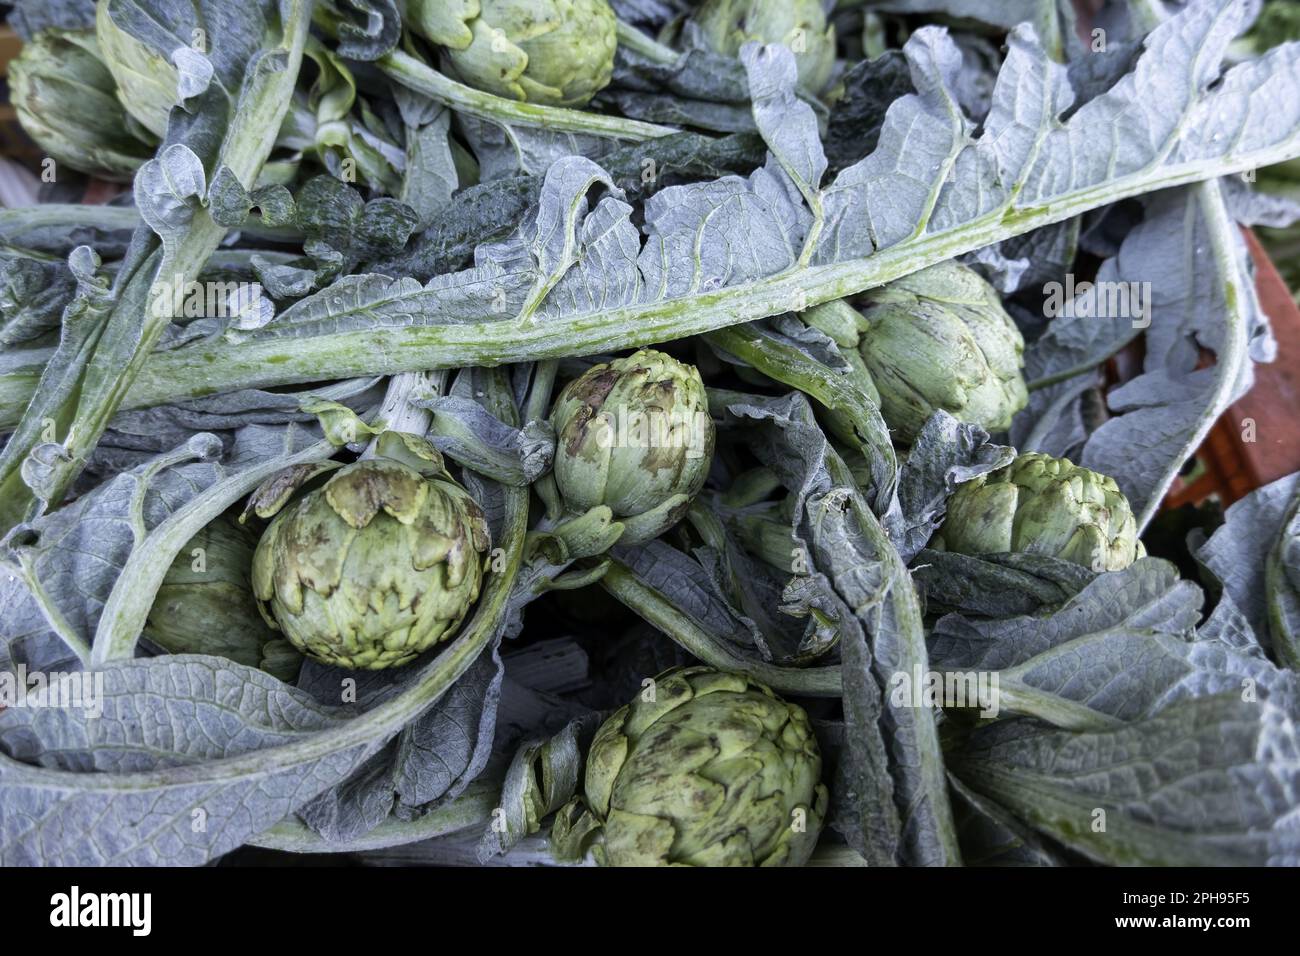 Detail of fresh vegetables in a market in Spain, healthy food, diet Stock Photo